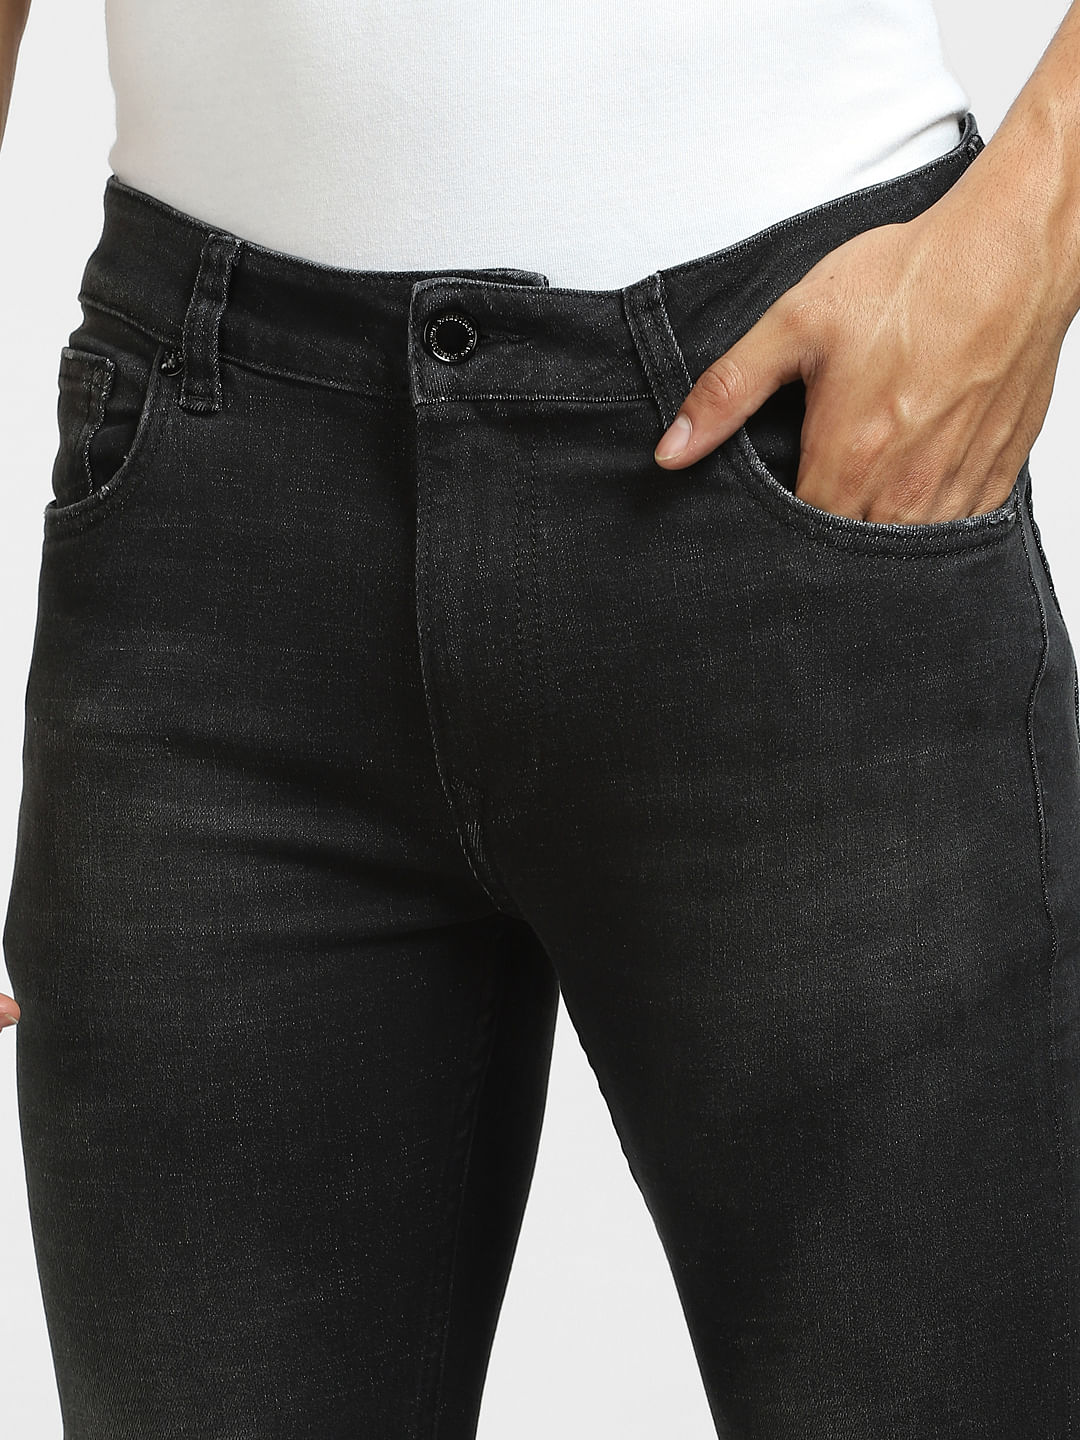 Gesture black narrow fit jeans - G3-MJE4421 | G3fashion.com